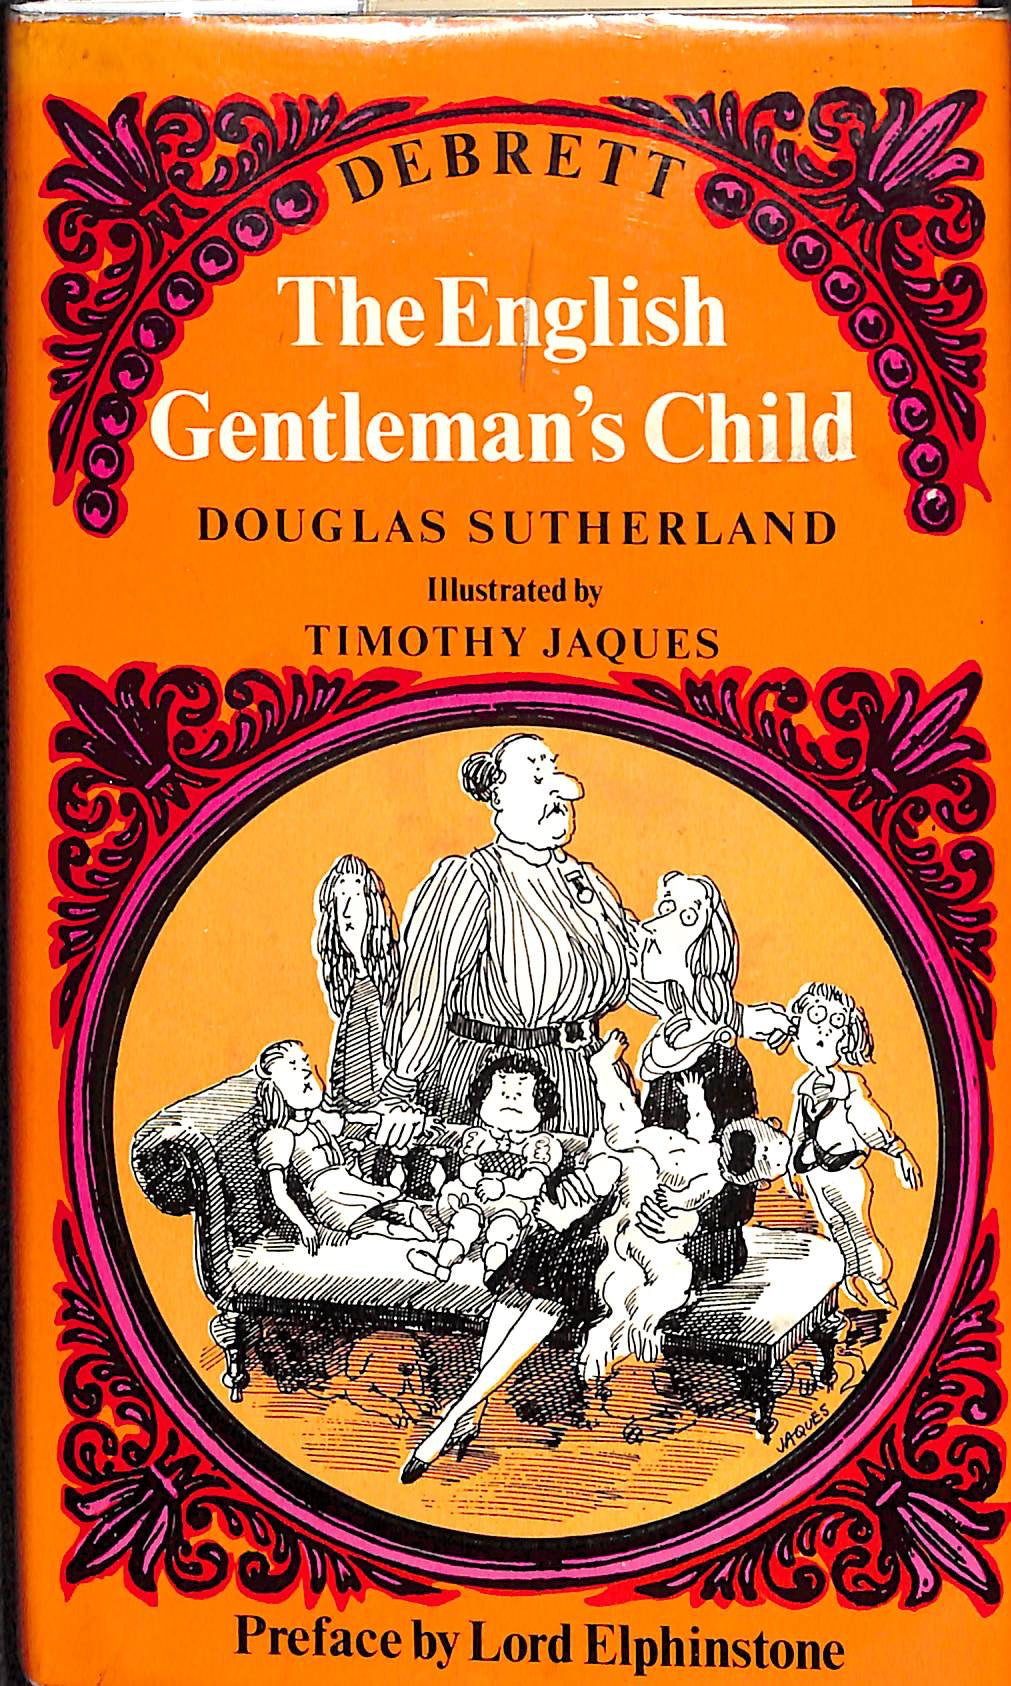 "The English Gentleman's Child" 1980 SUTHERLAND, Douglas (SOLD)